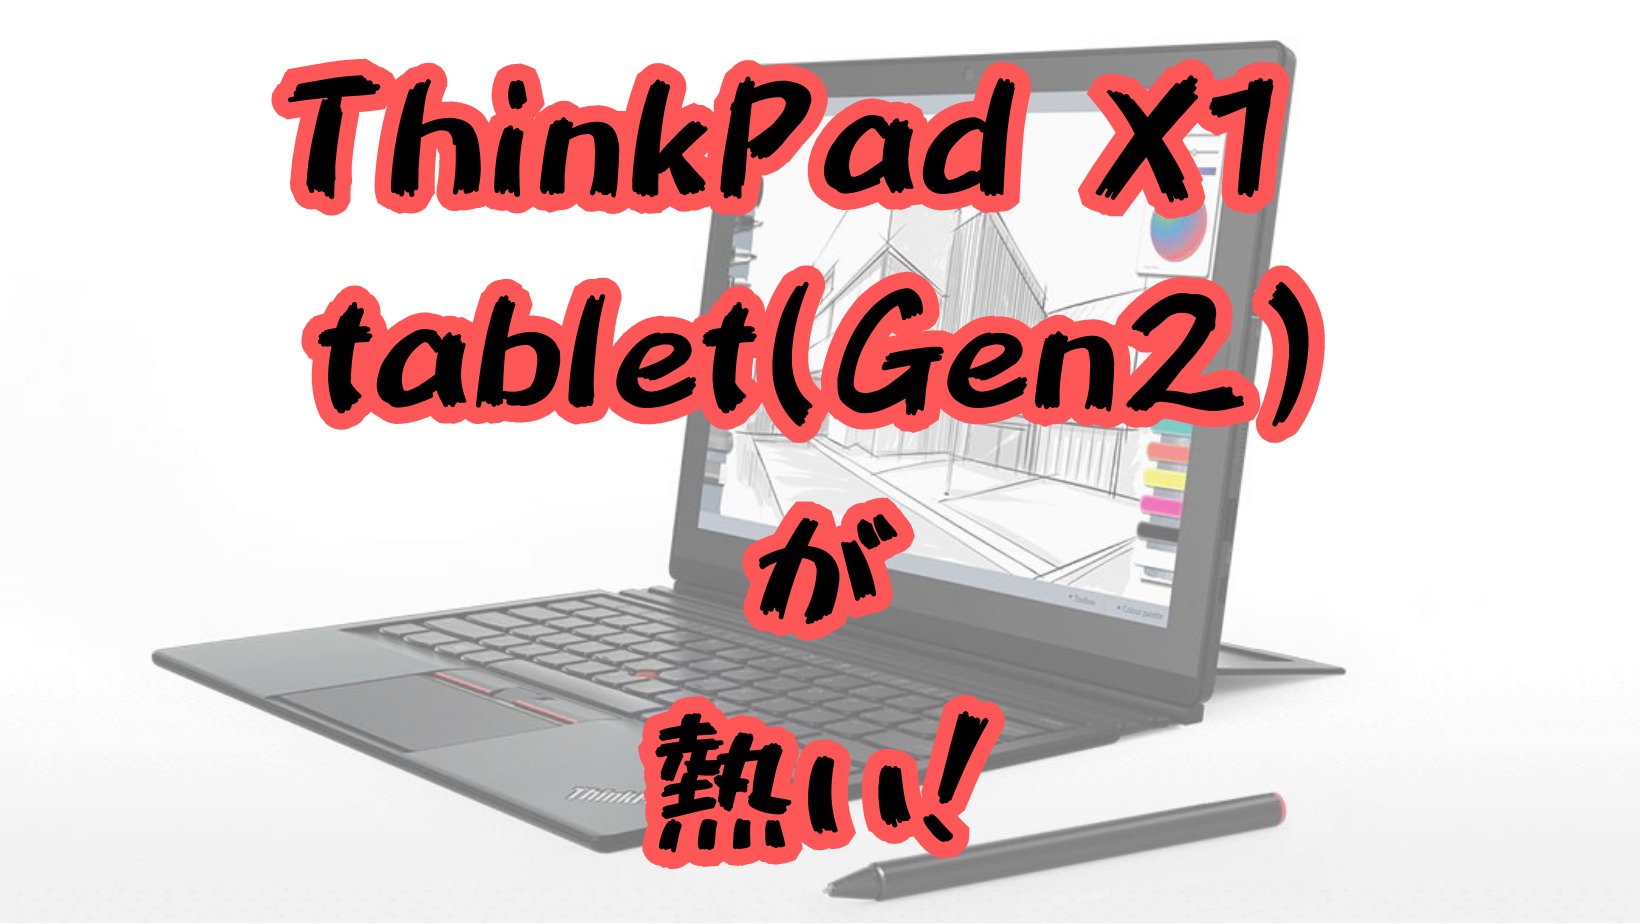 ThinkPad X1 Tablet(Gen2)が熱い！ | Amazon探検隊